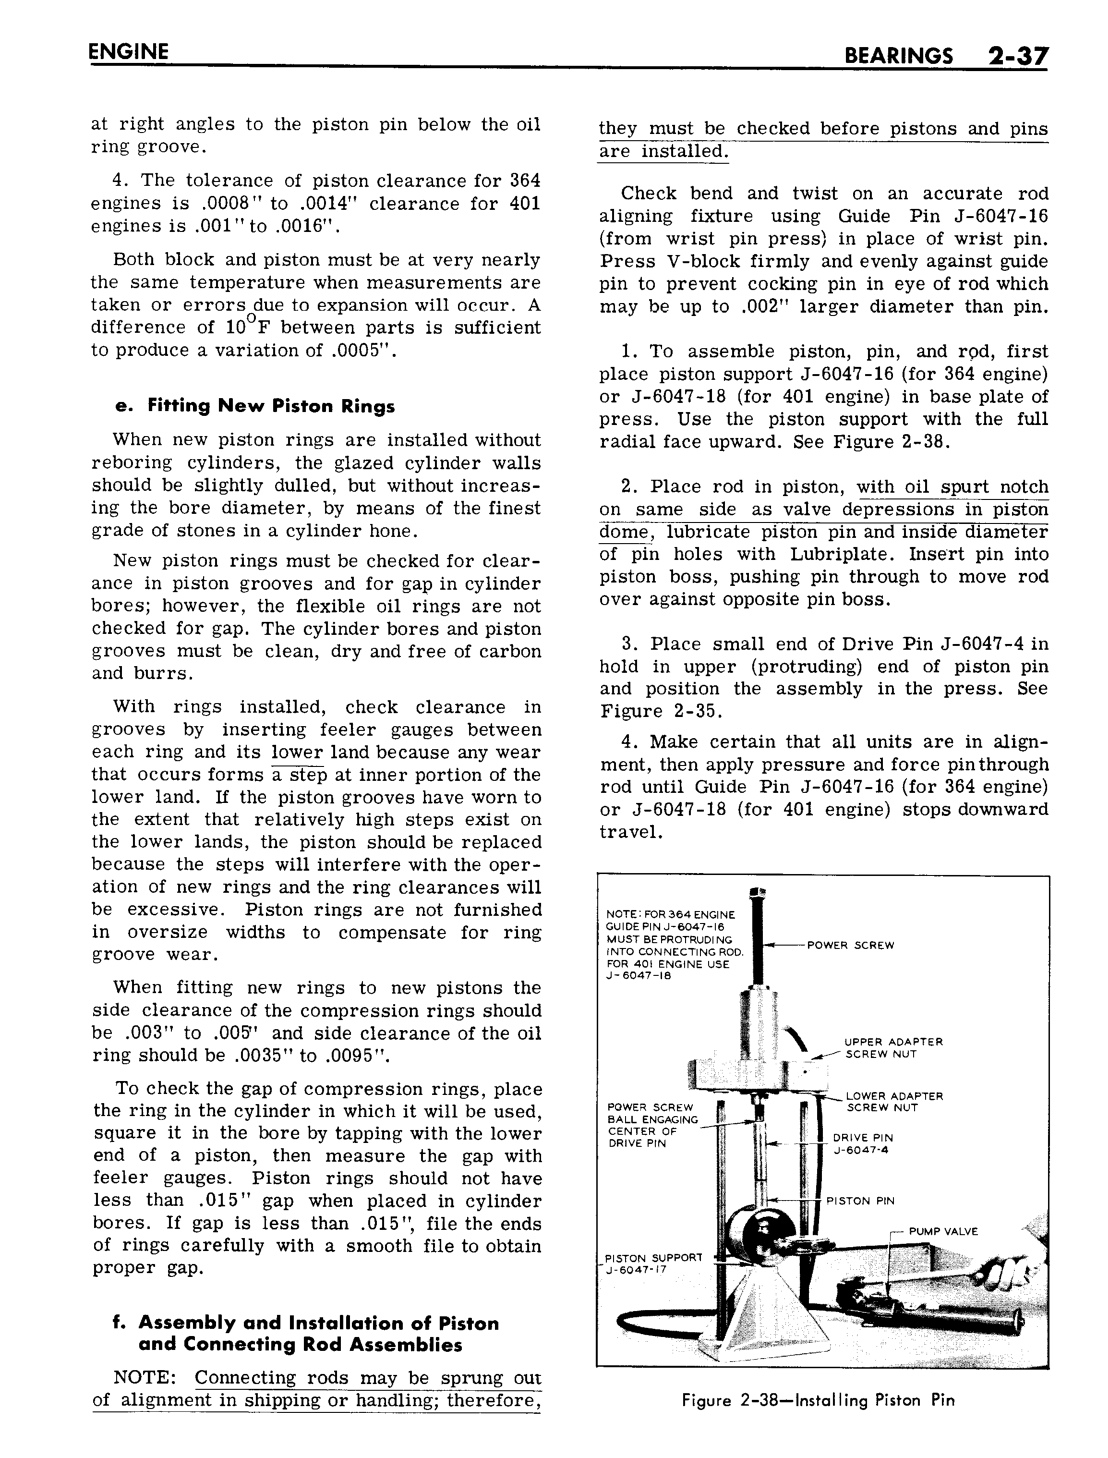 n_03 1961 Buick Shop Manual - Engine-037-037.jpg